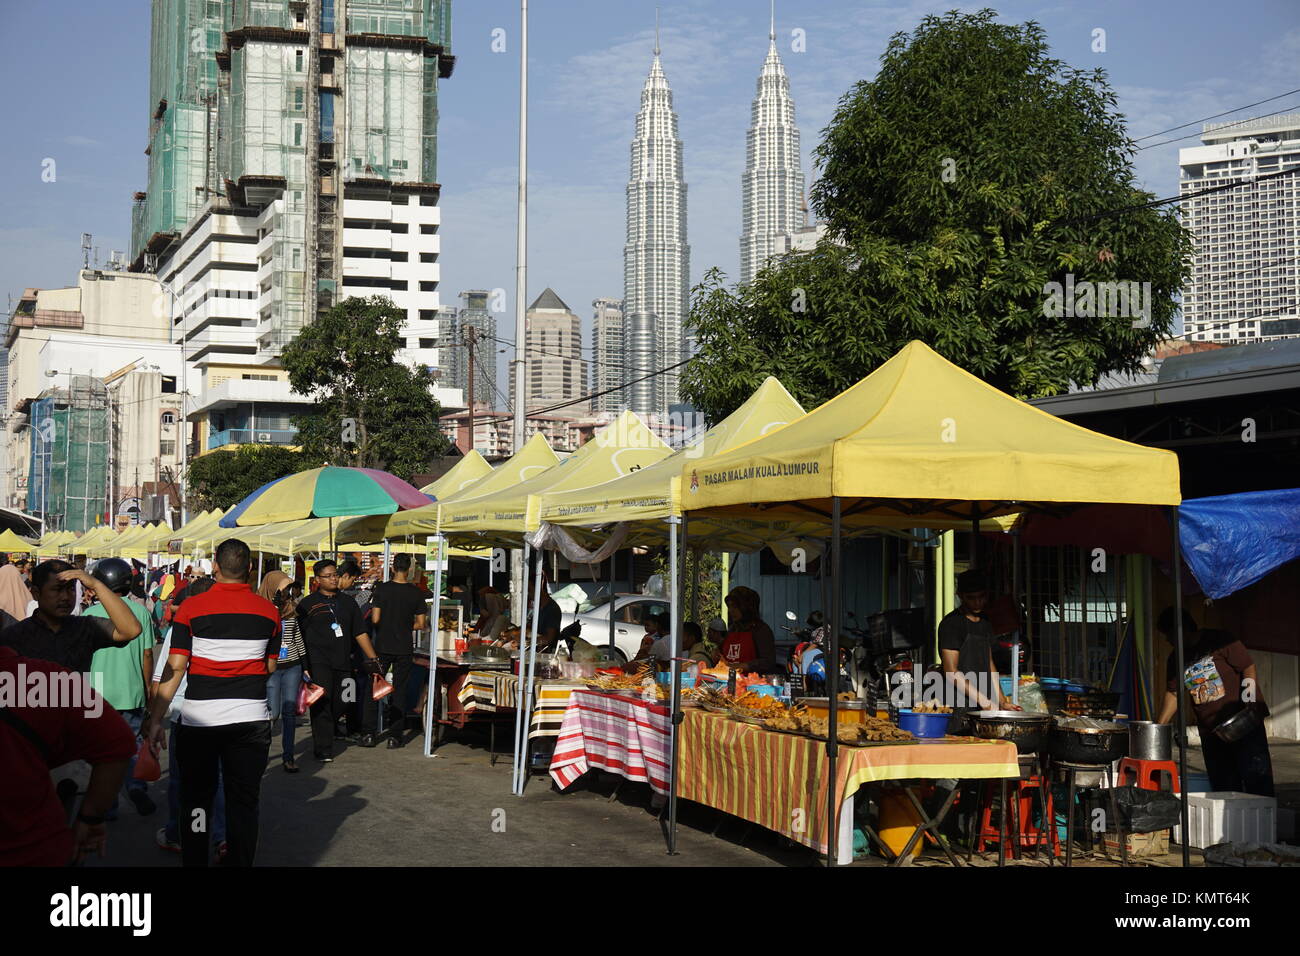 Ramadan food bazaar in Kampung Baru, Kuala Lumpur, Malaysia Stock Photo